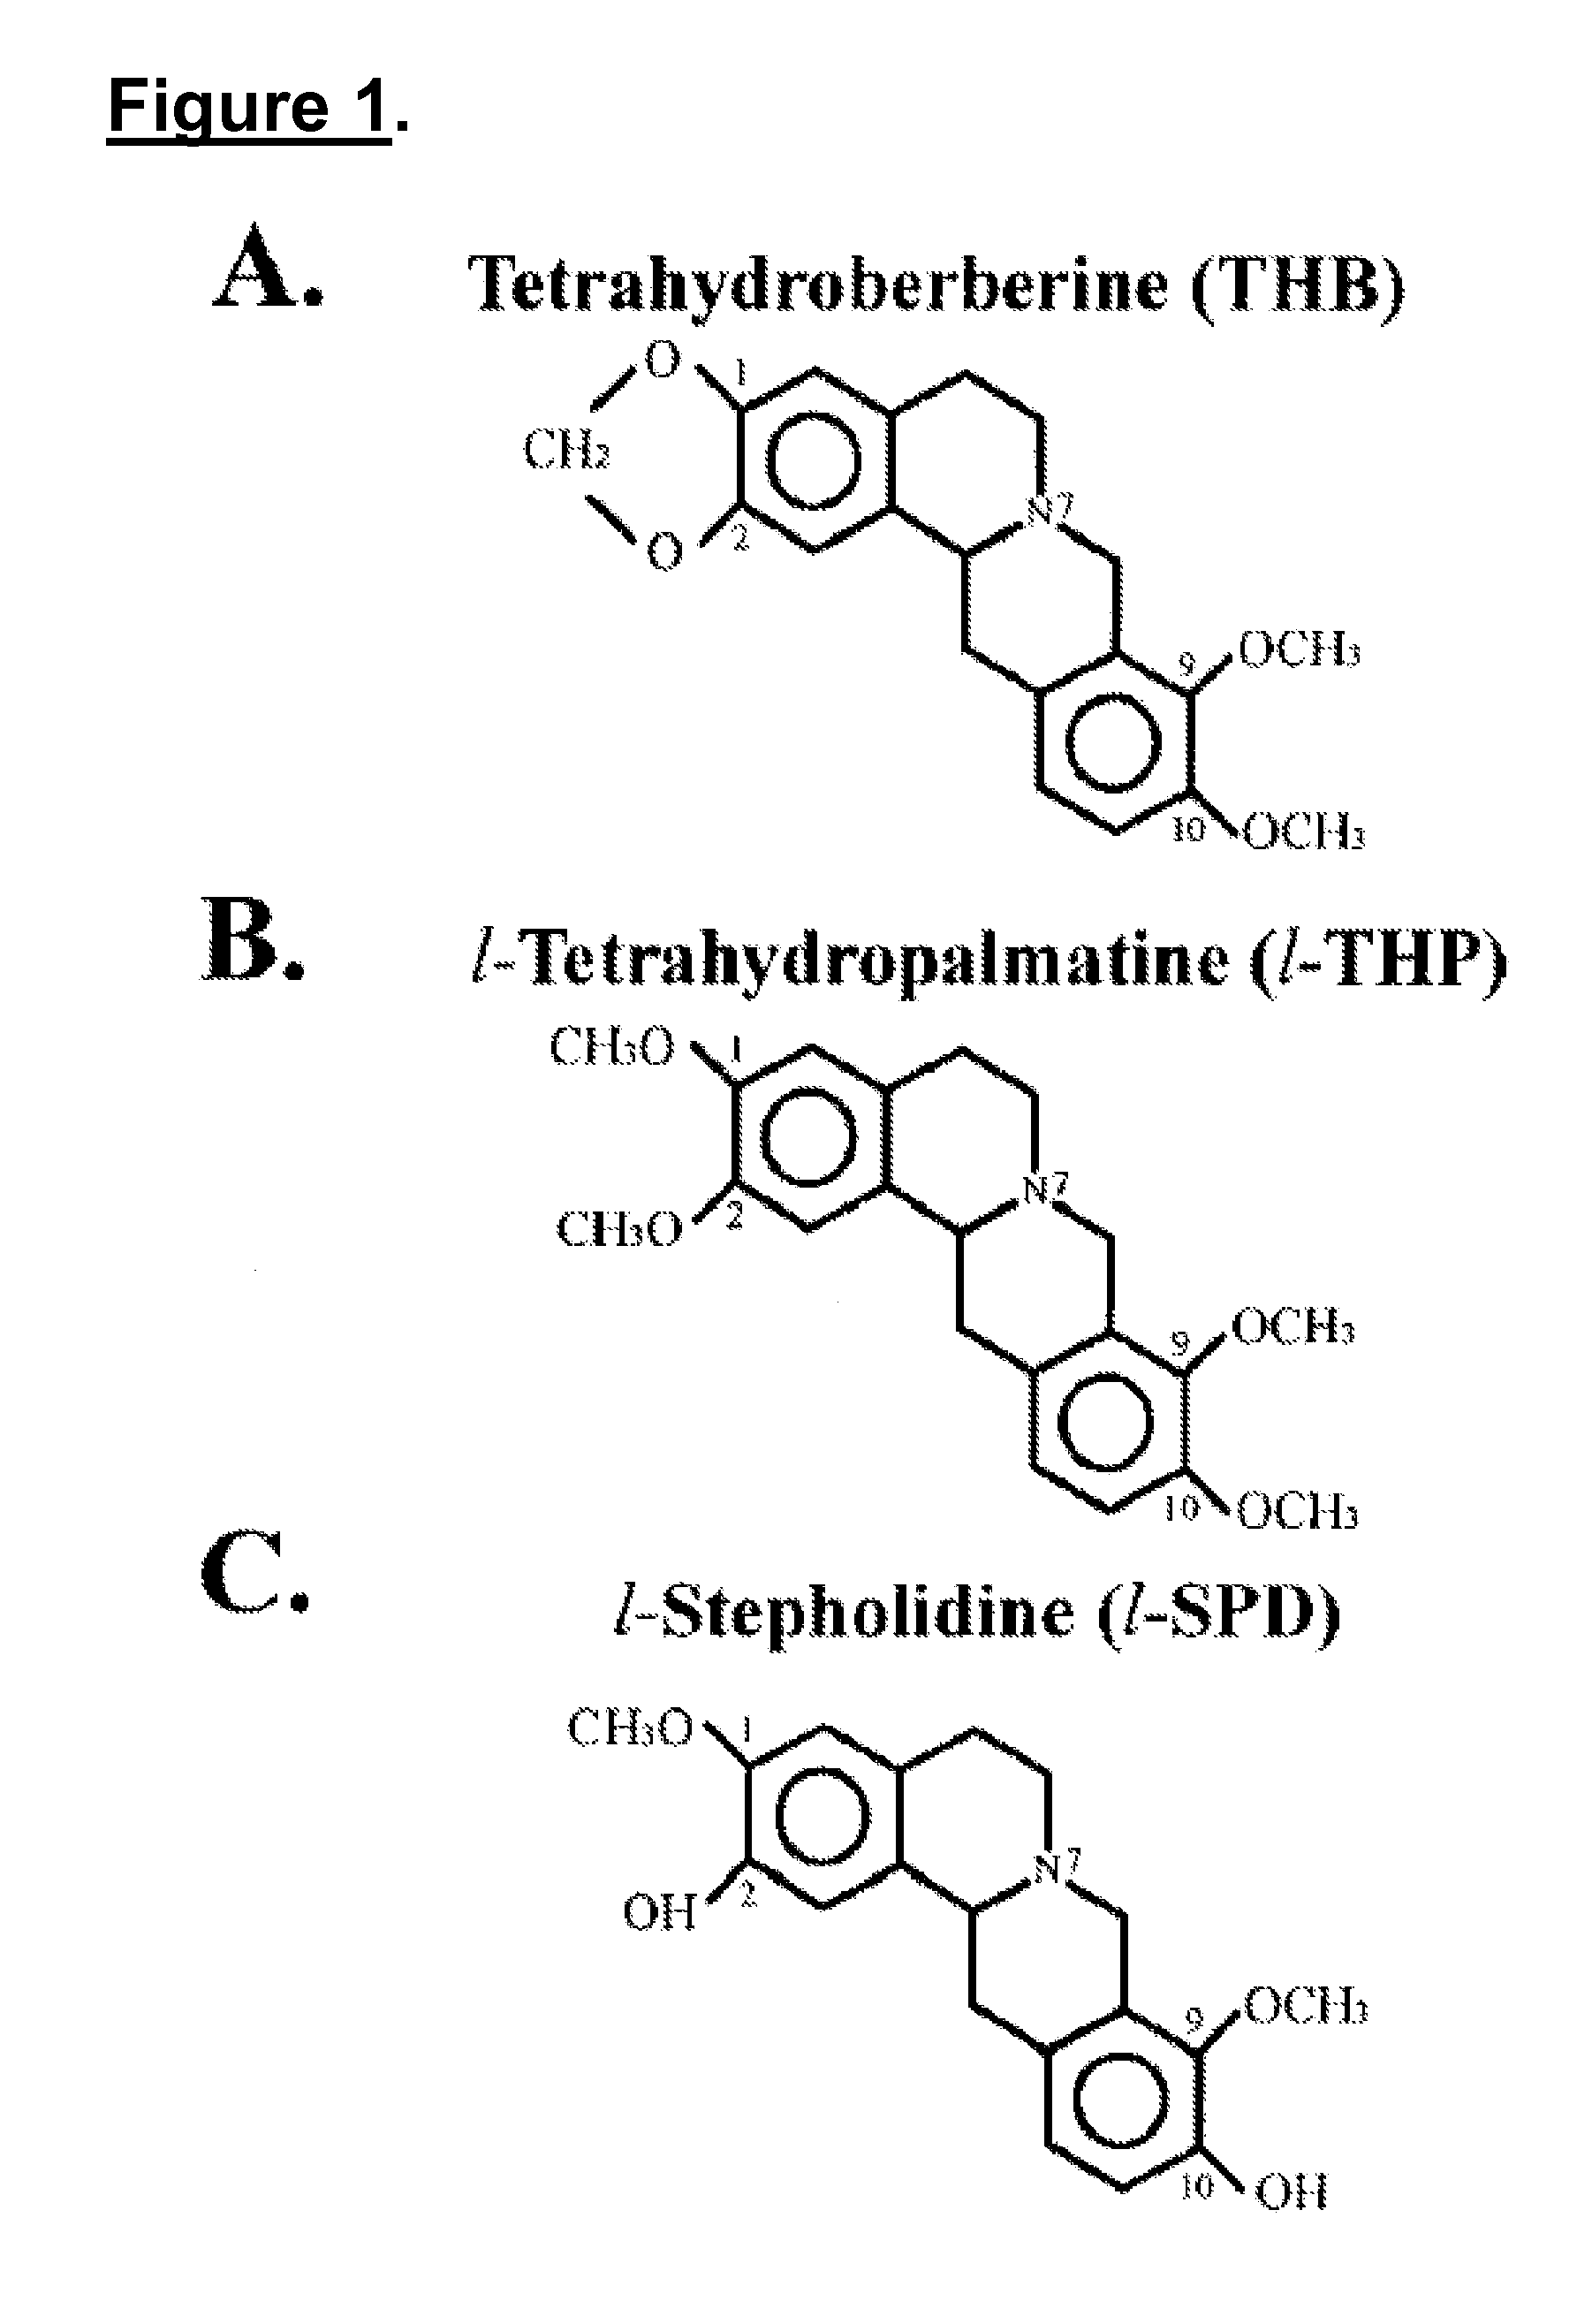 Novel methods of use of tetrahydroberberine (THB)